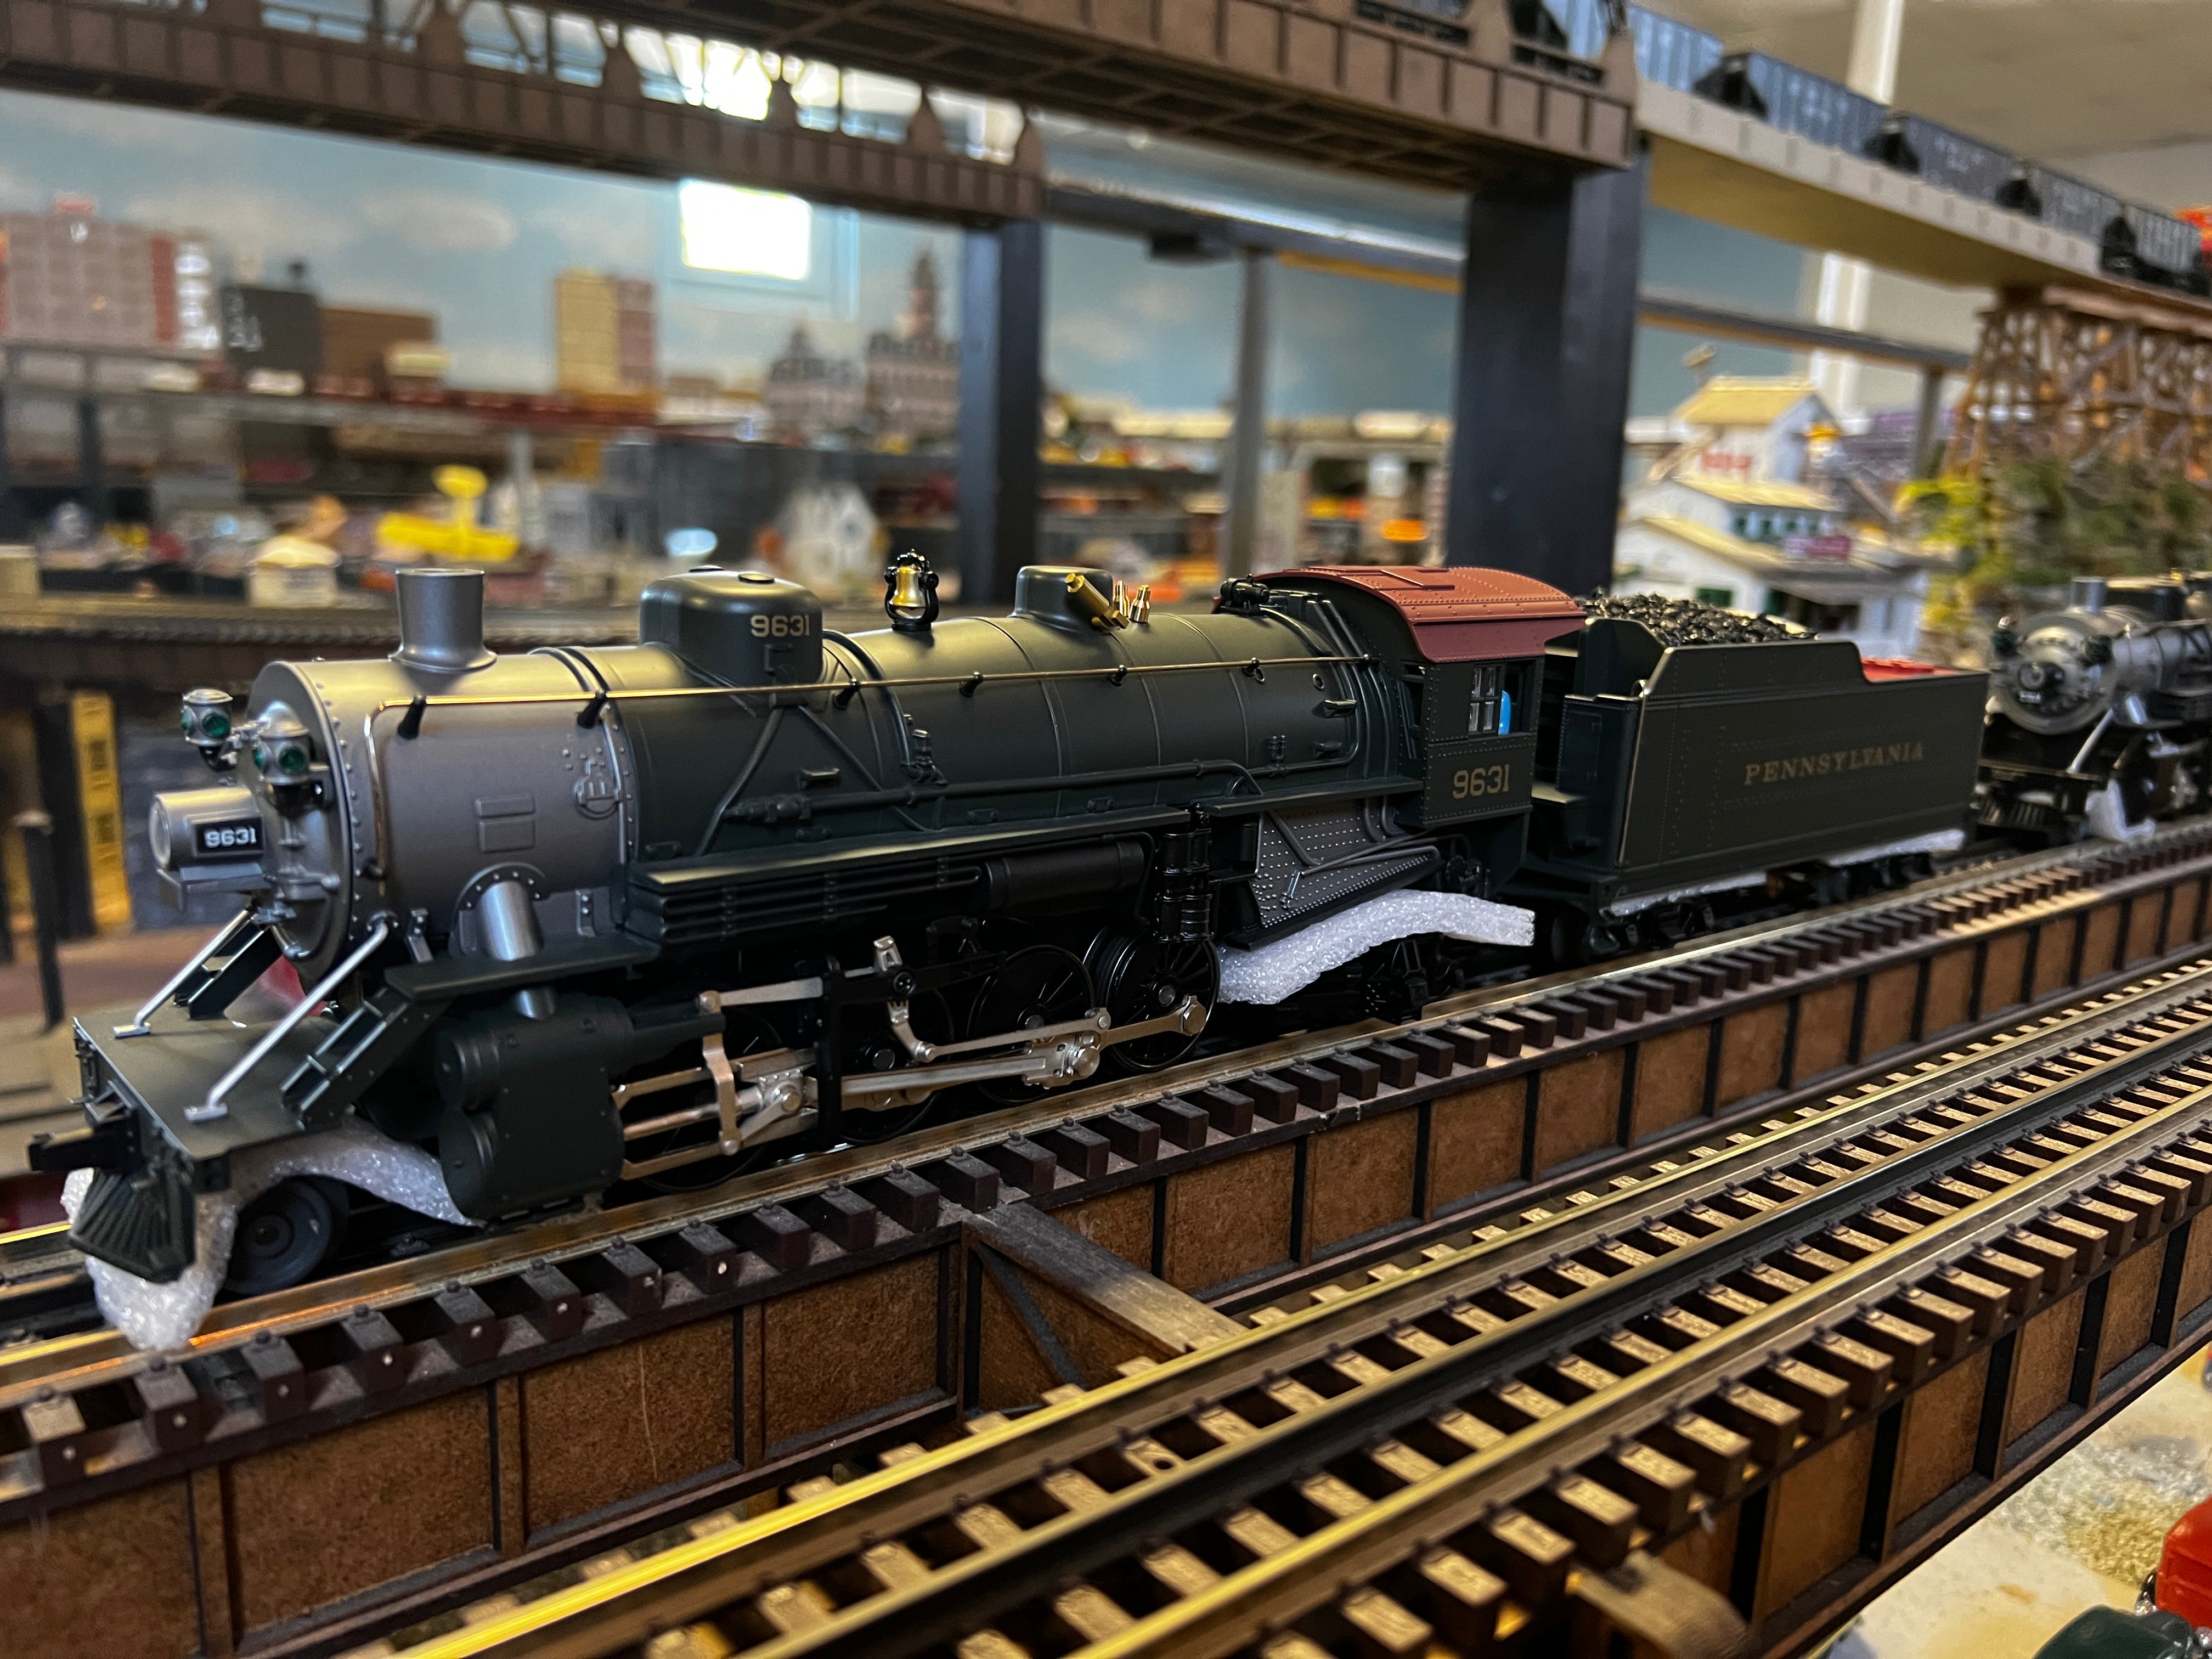 Lionel 2332090 - LionChief+ 2.0 Mikado Steam Locomotive "Pennsylvania" #9631